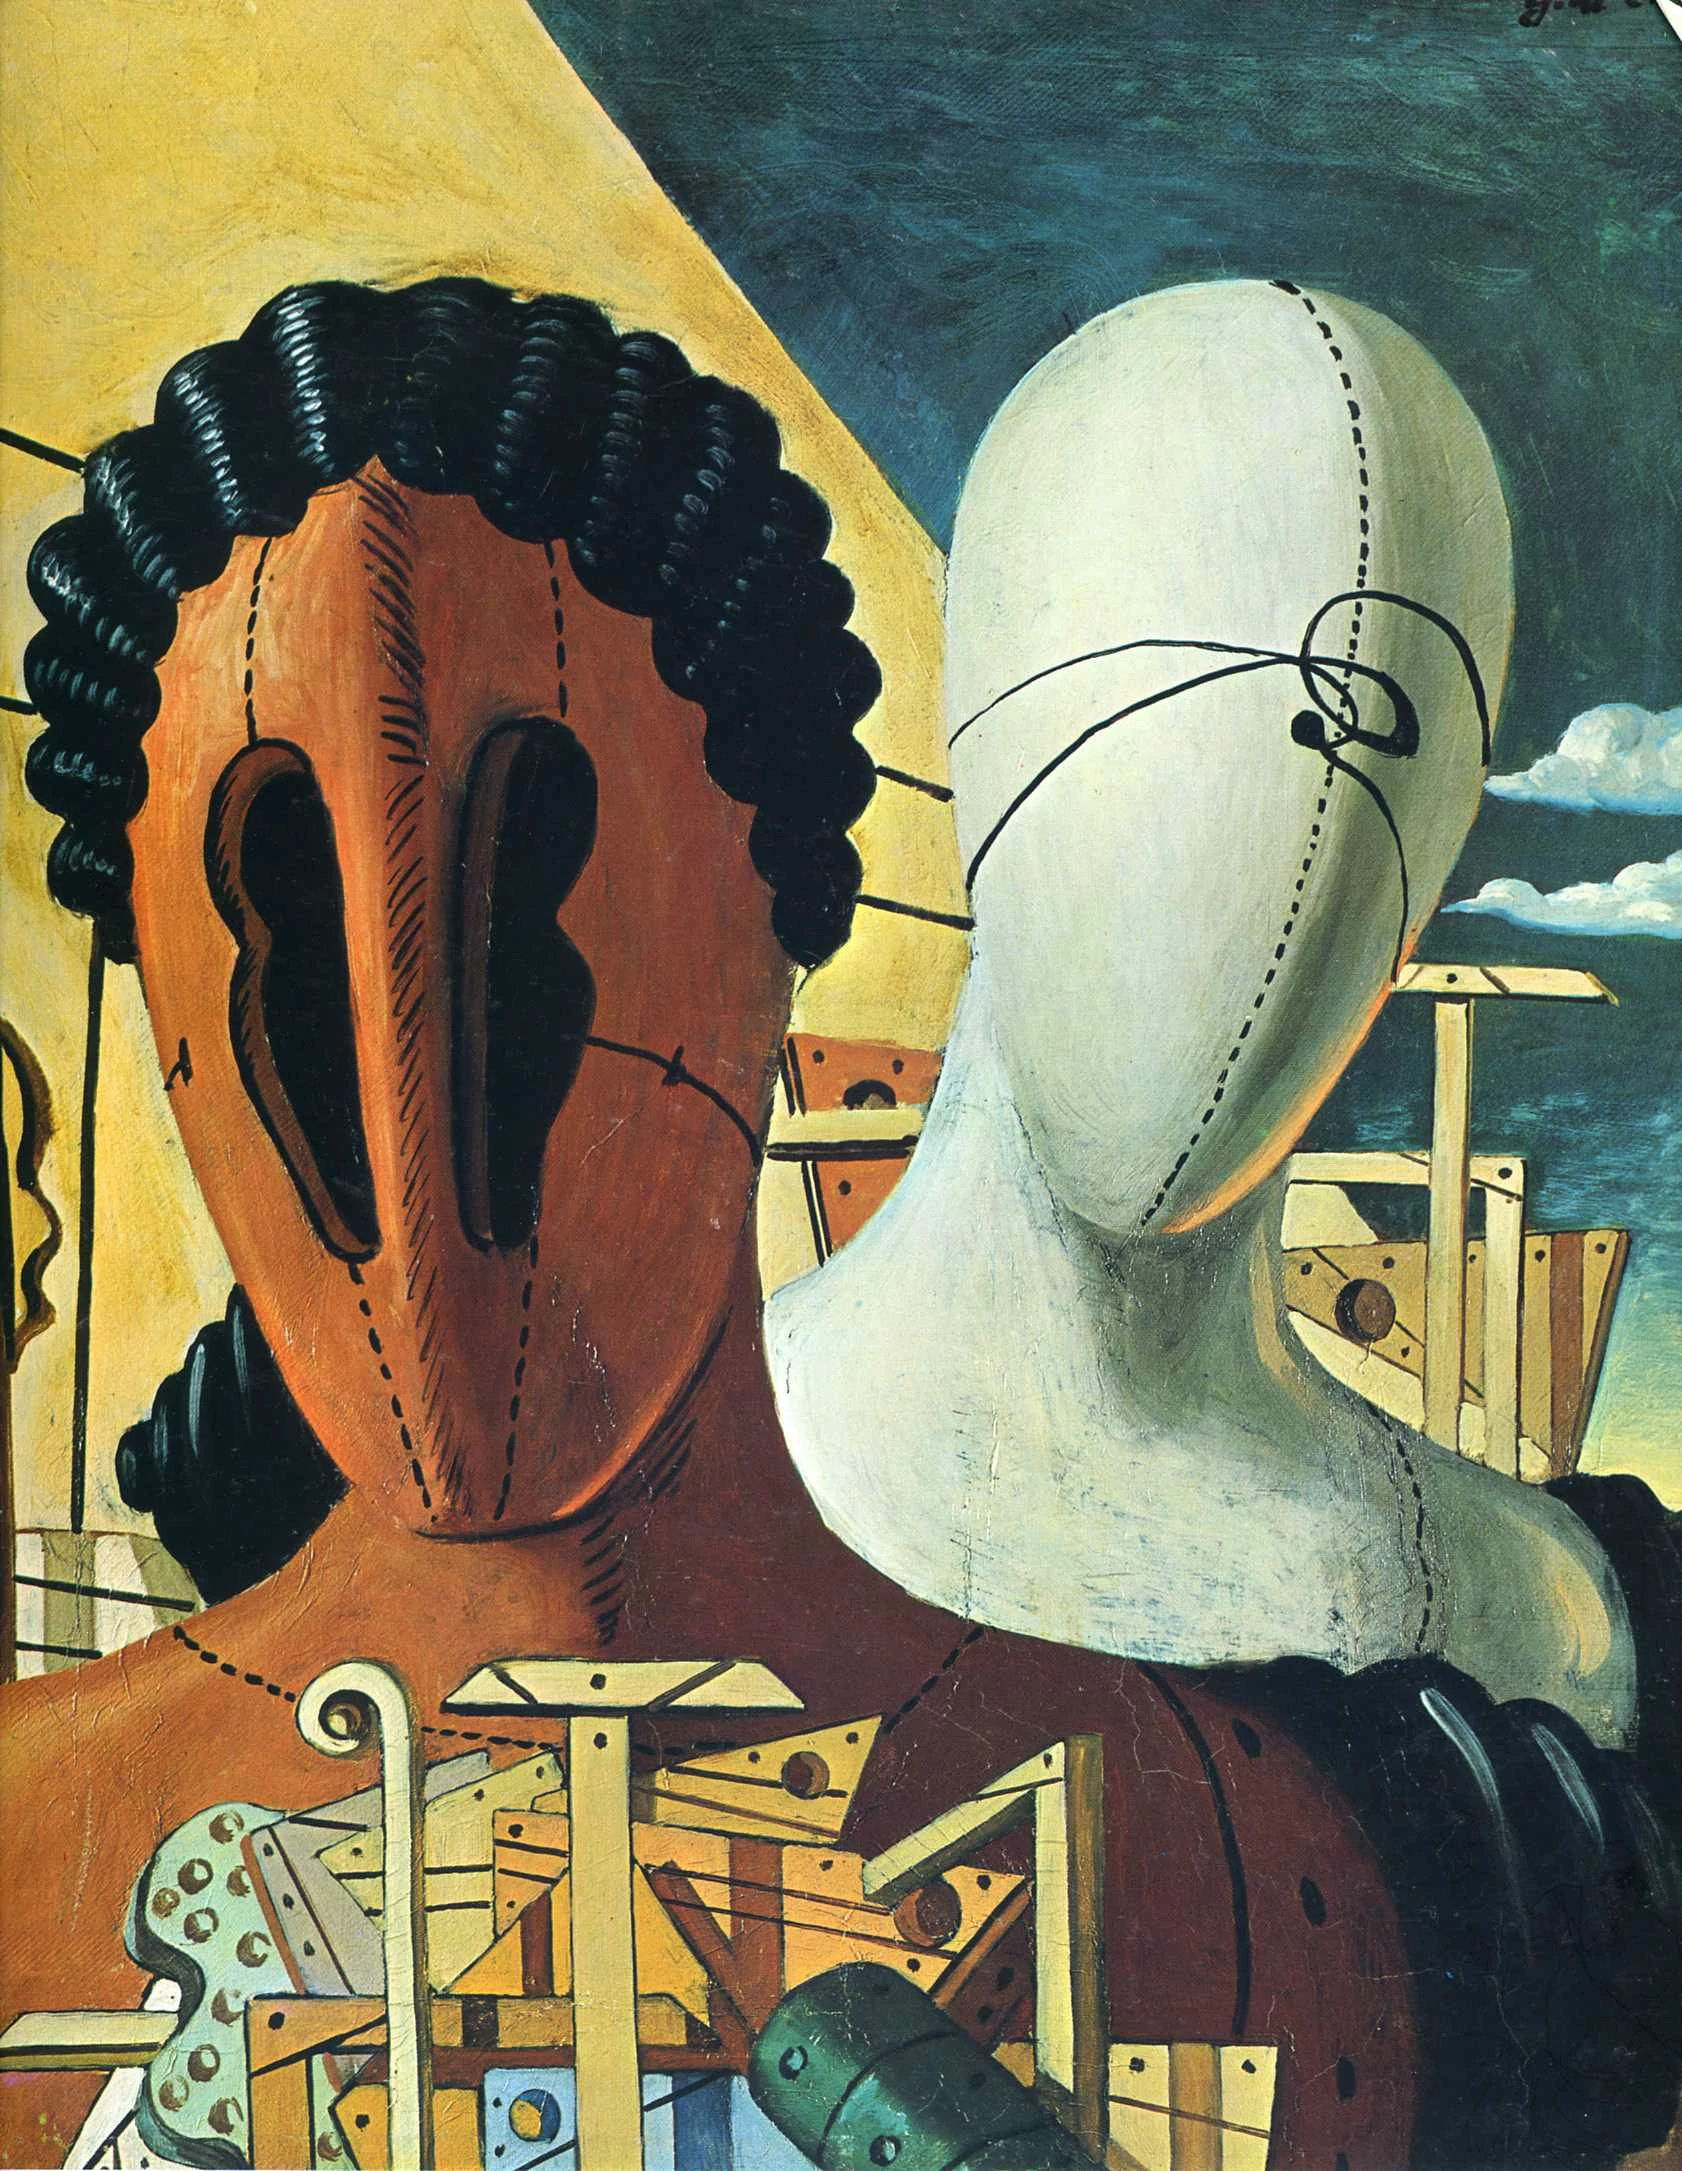 The Two Masks, Giorgio de Chirico